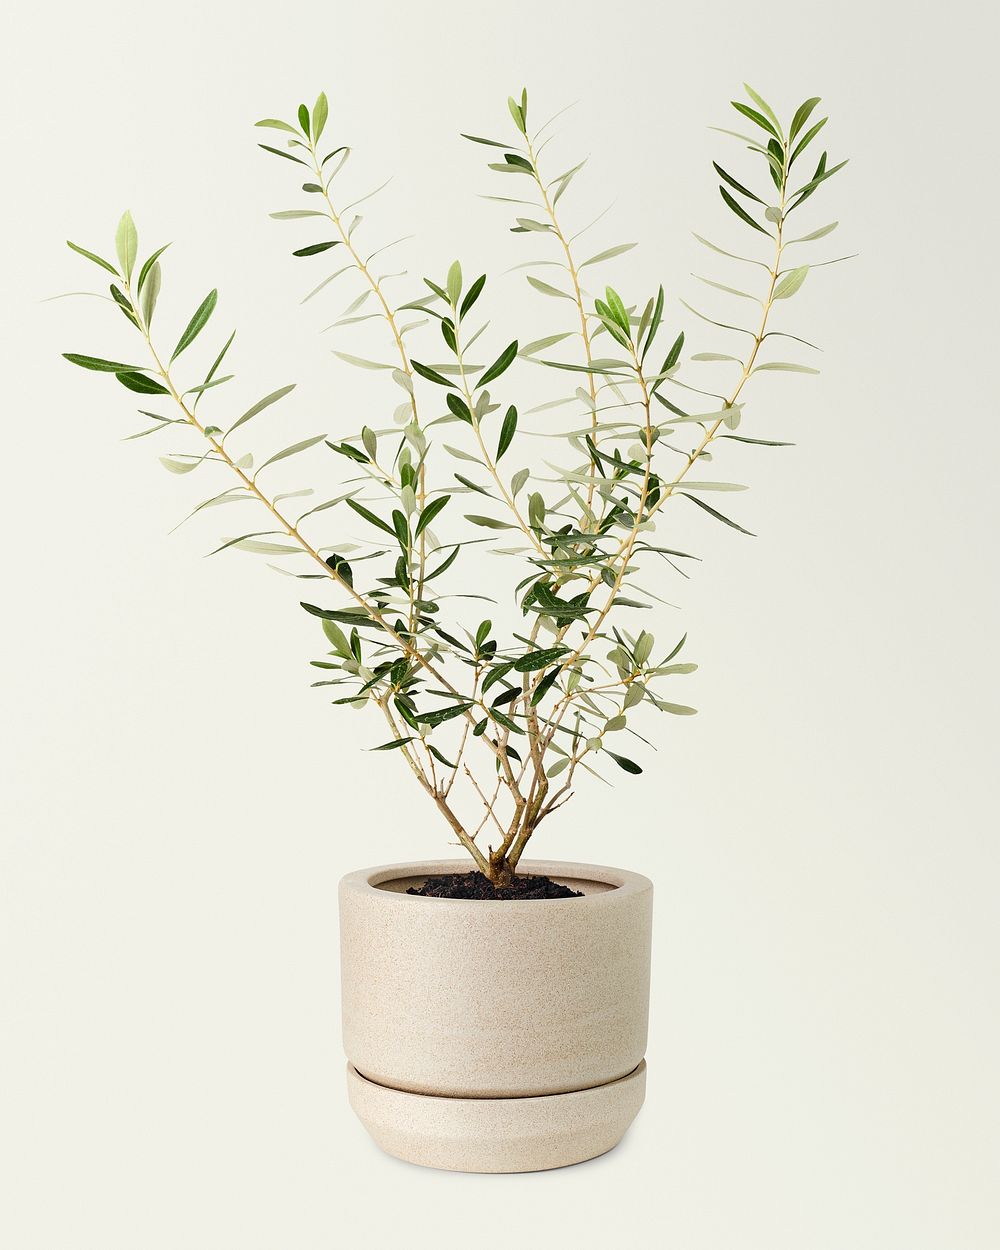 Olive plant in a ceramic pot